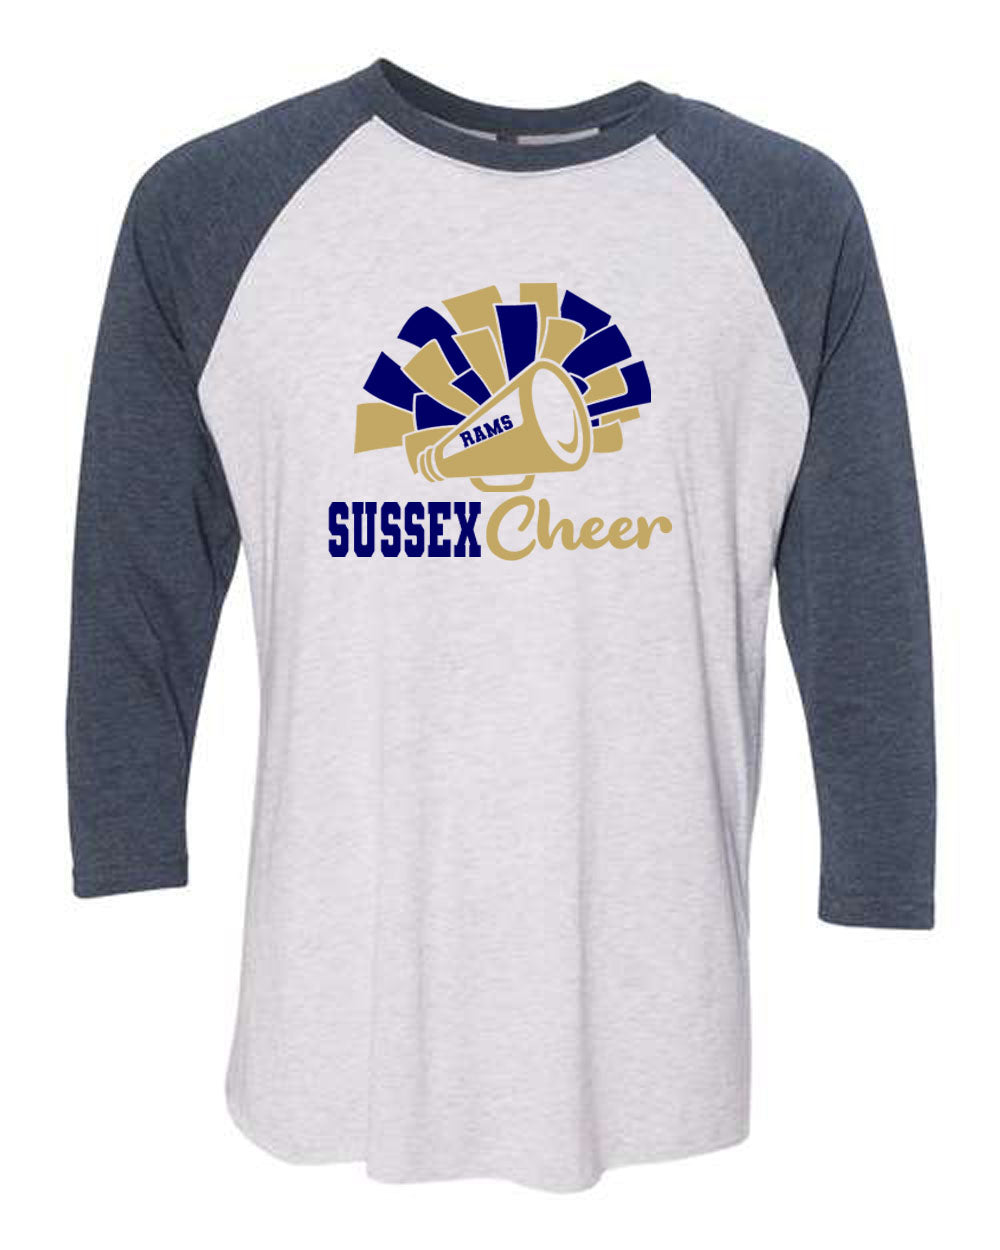 Sussex Middle Cheer Design 2 raglan shirt